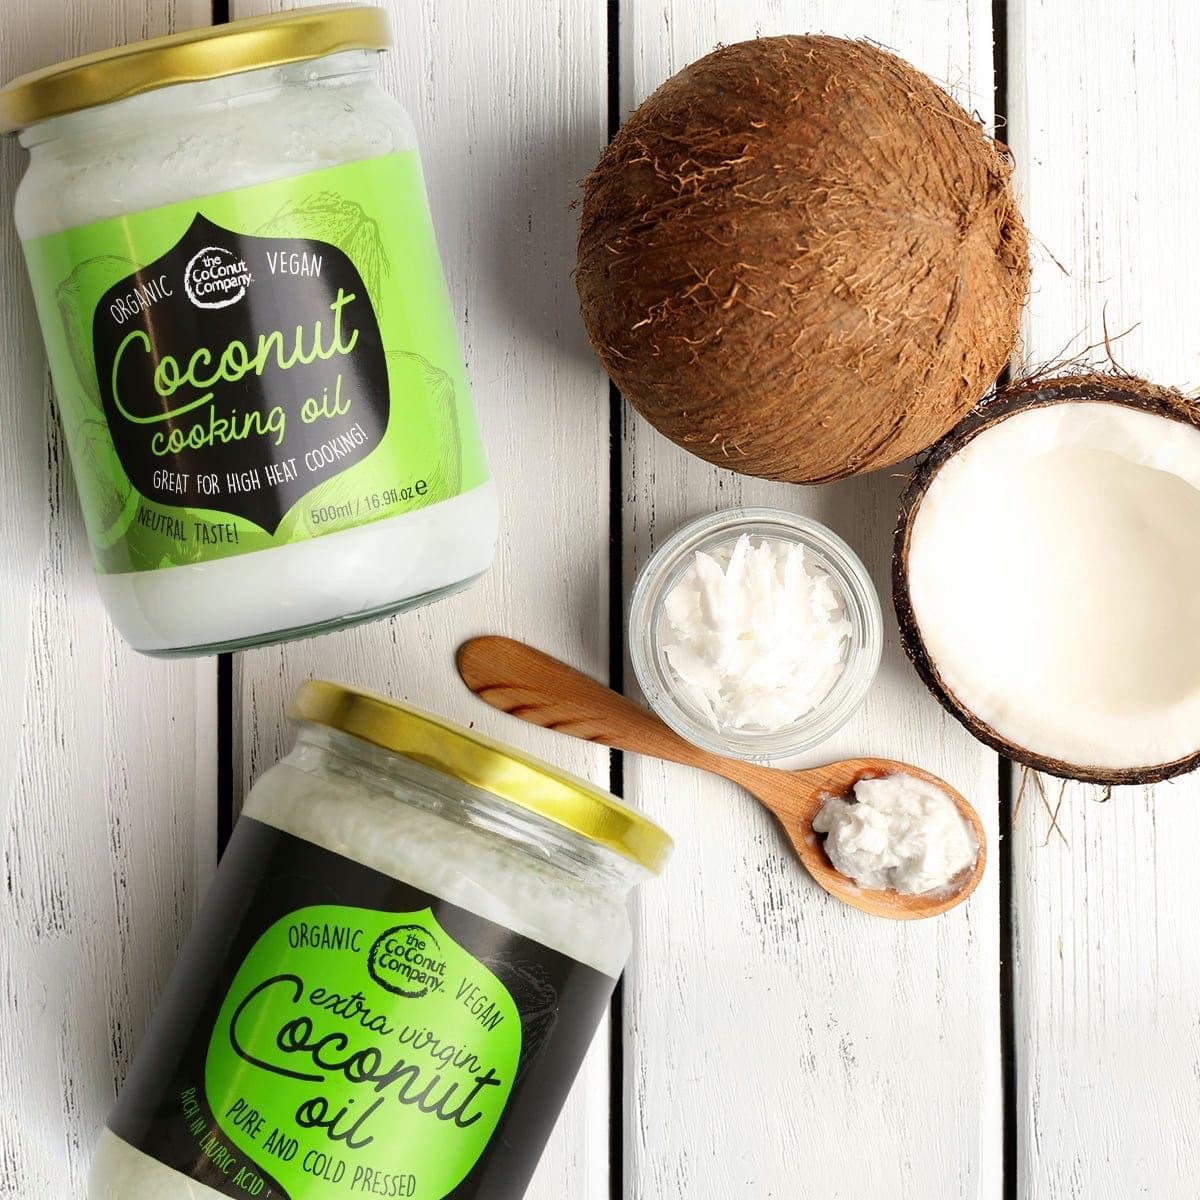 Find the Most Reliable Coconut Wax Wholesaler - Coconutio